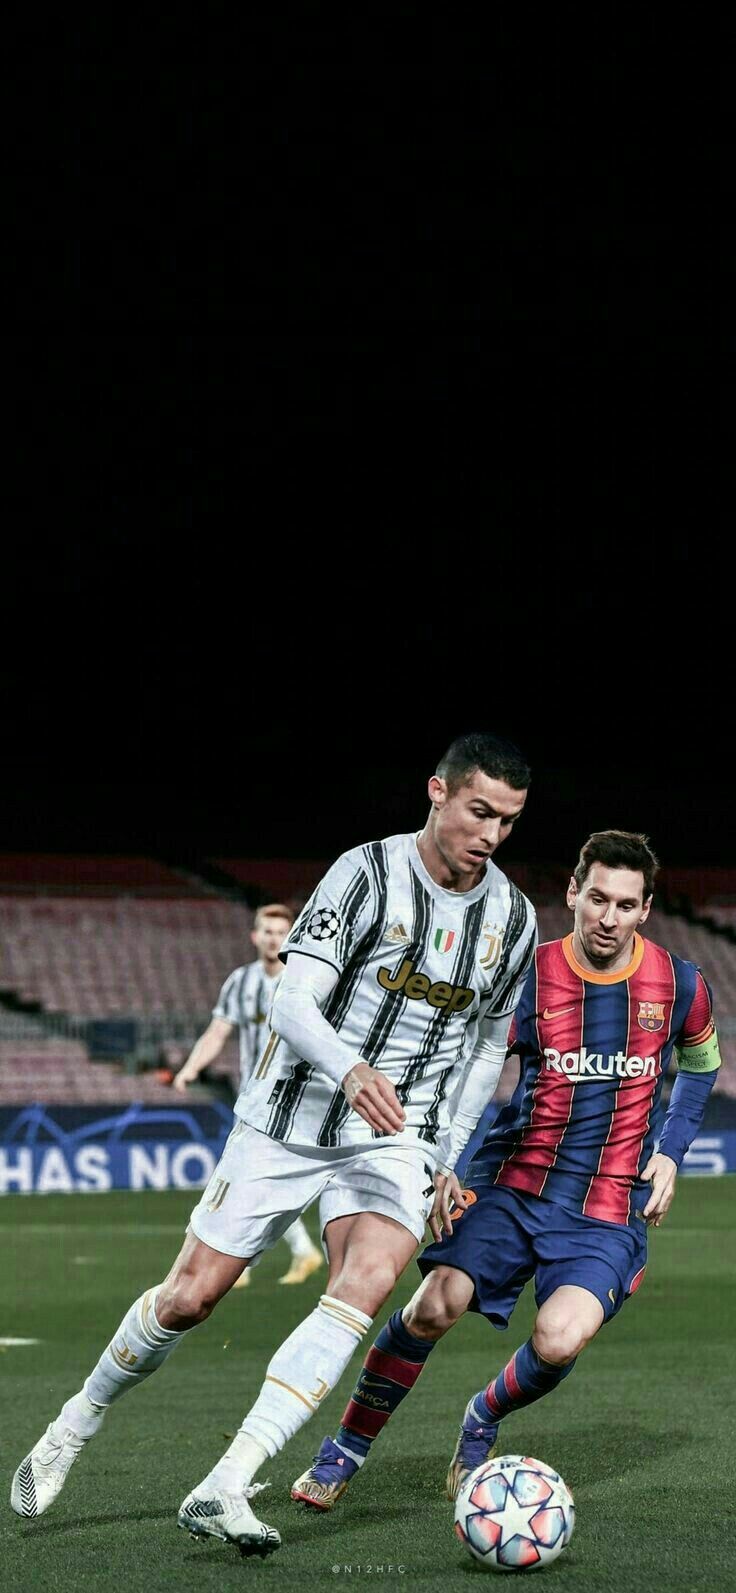 FreekickFrat 在 Instagram 上发布Ronaldo or Messi  Follow freekickfrat  freekickfrat freekickfrat     football soc  Messi and ronaldo  Ronaldo Messi vs